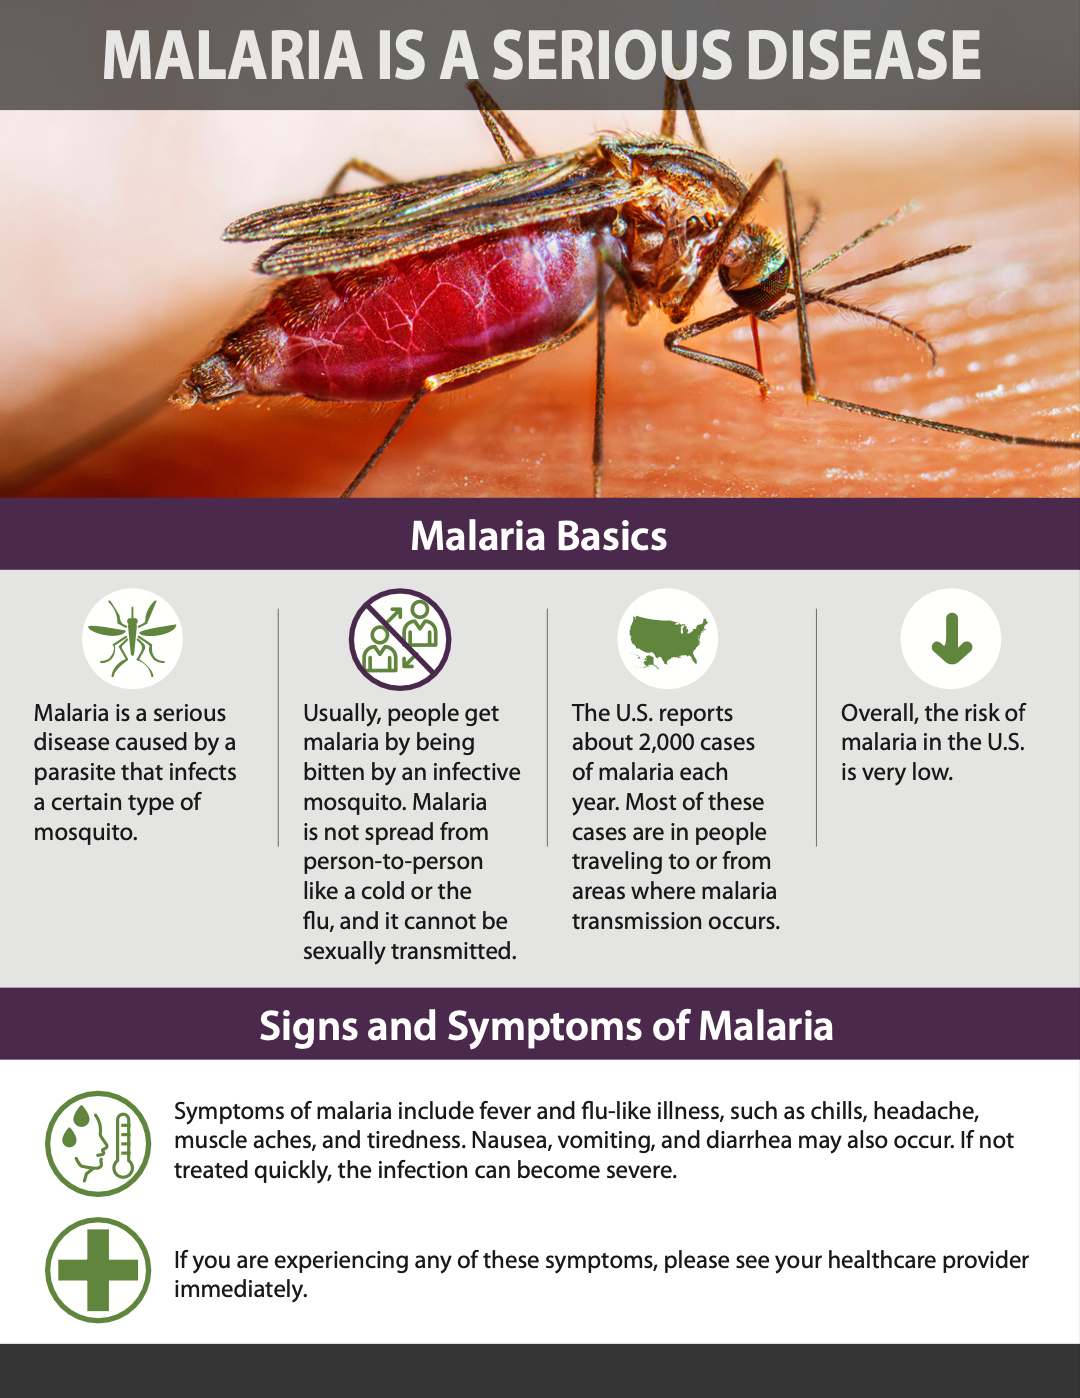 Are conditions right for malaria to make a comeback in the United States?